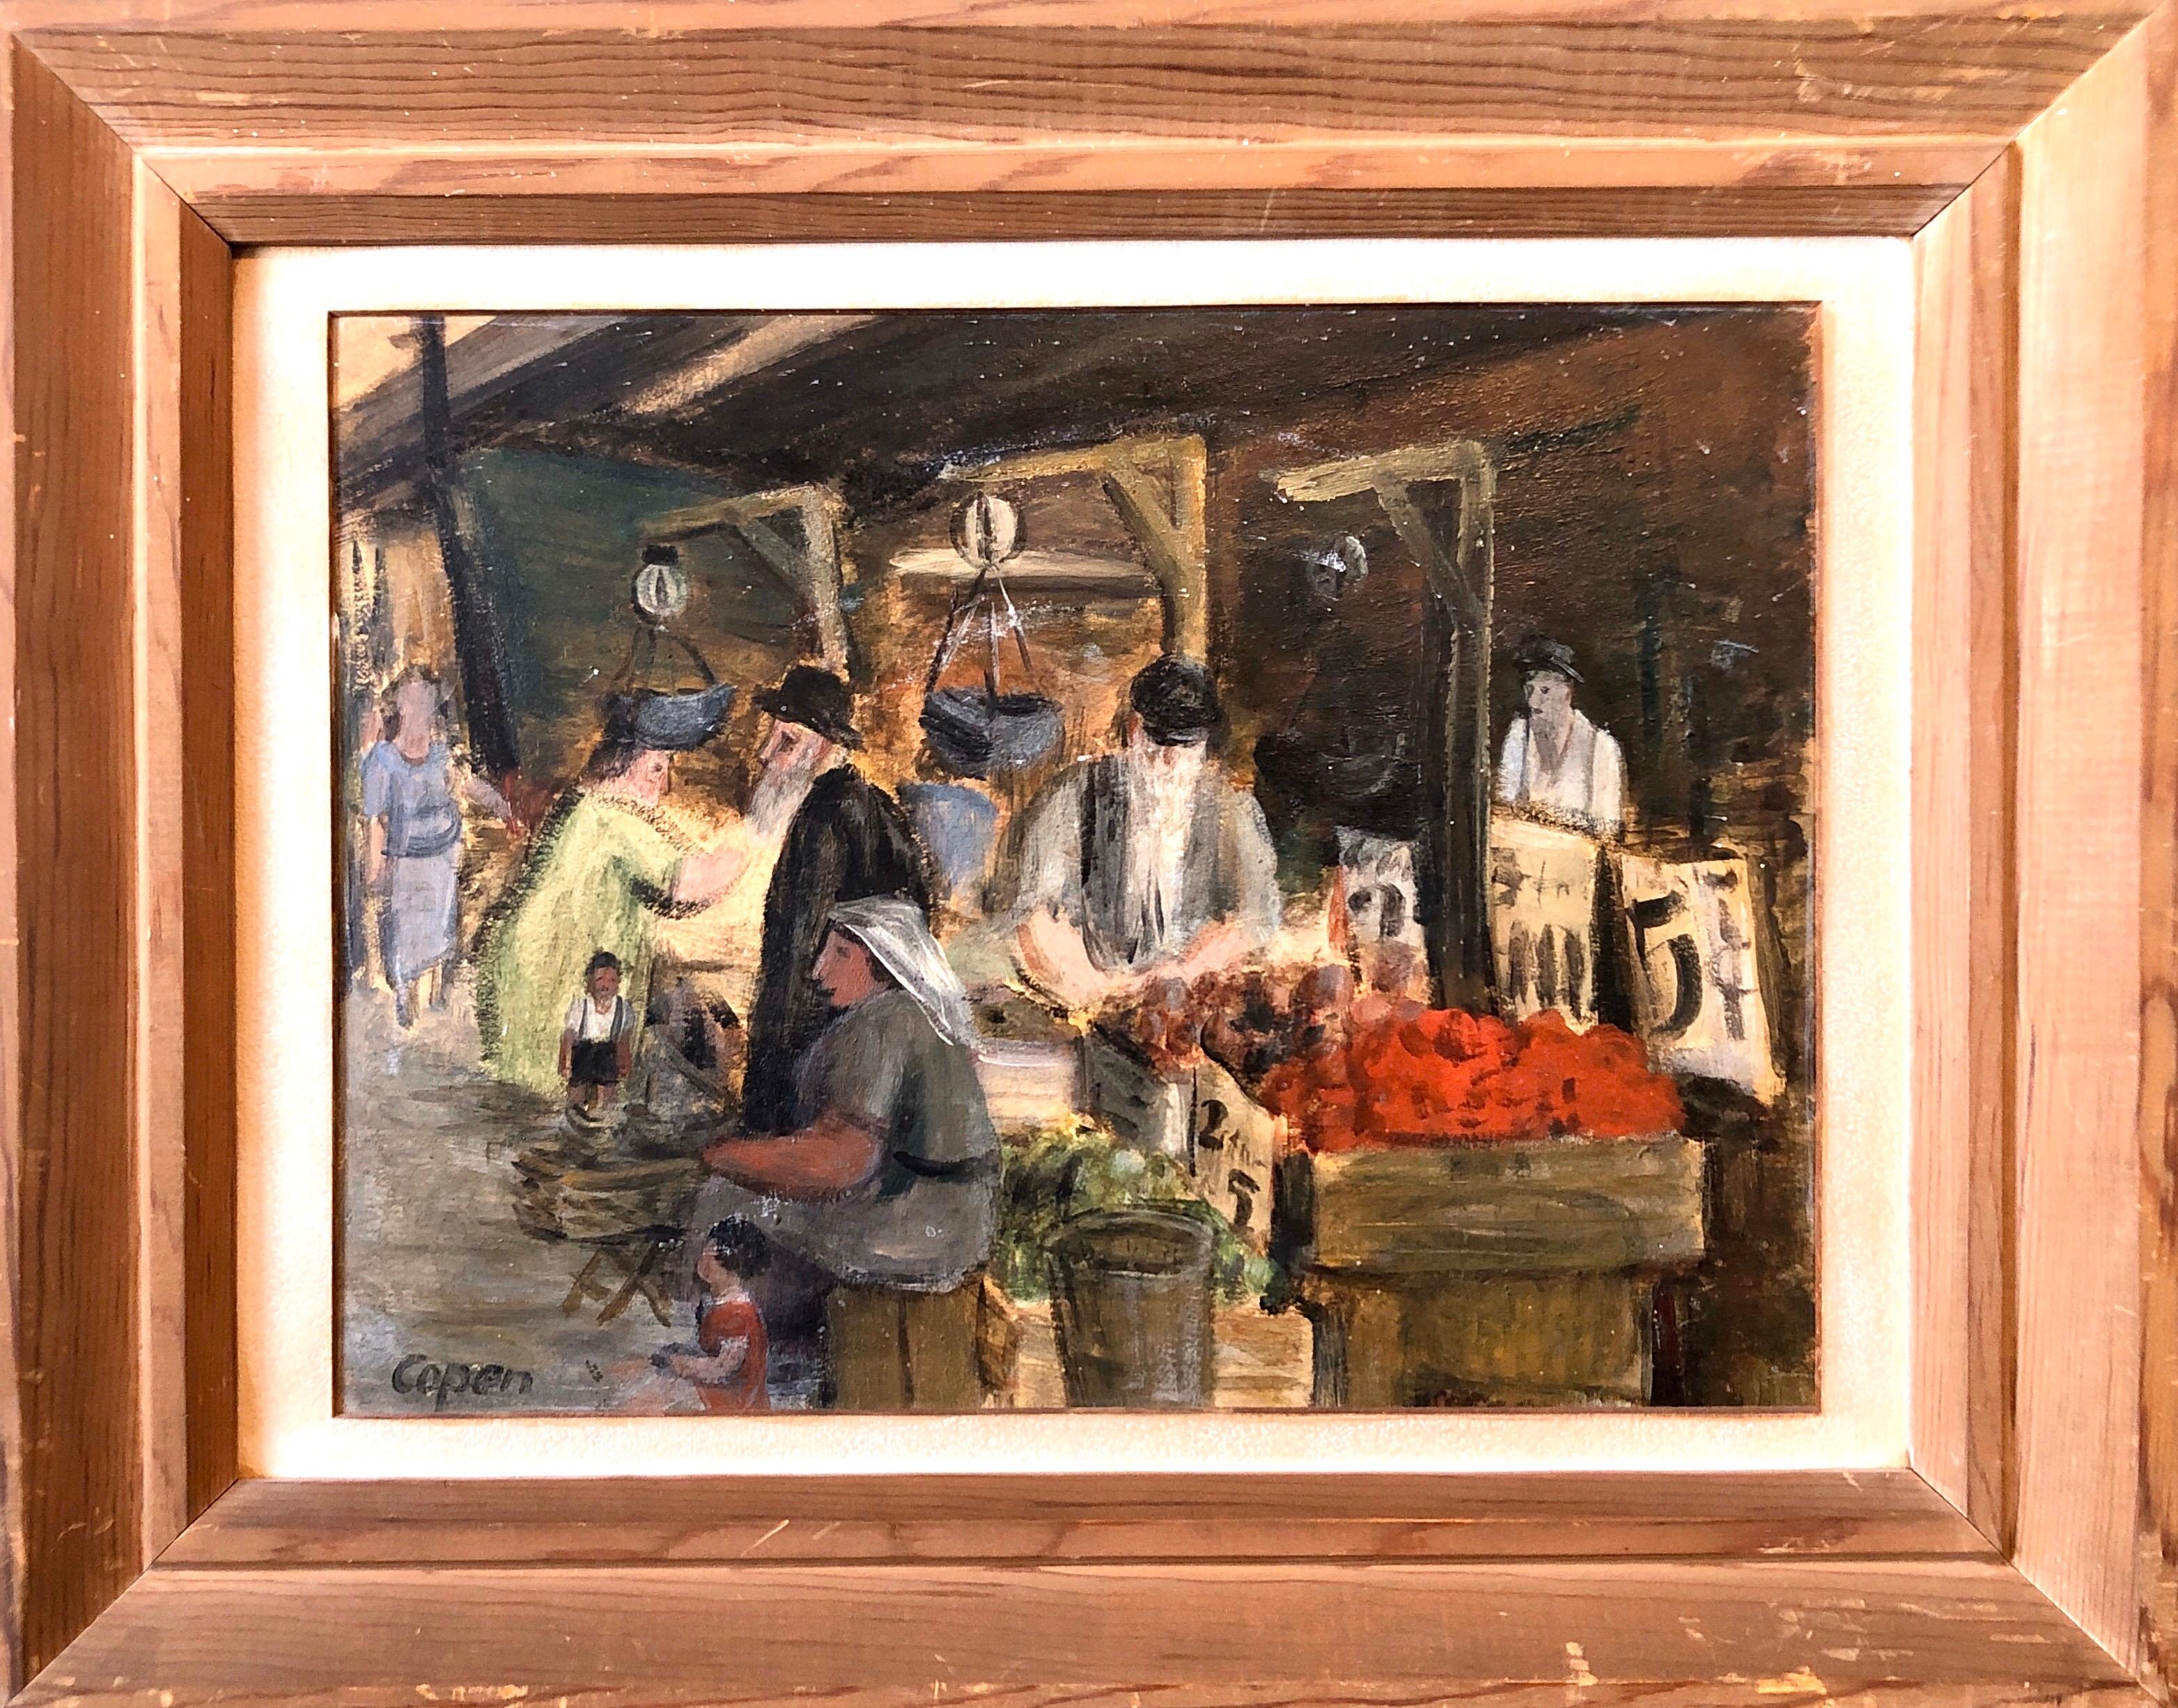  Judaica Market Scene, Shuk, European Hasidic Rabbi Oil Painting